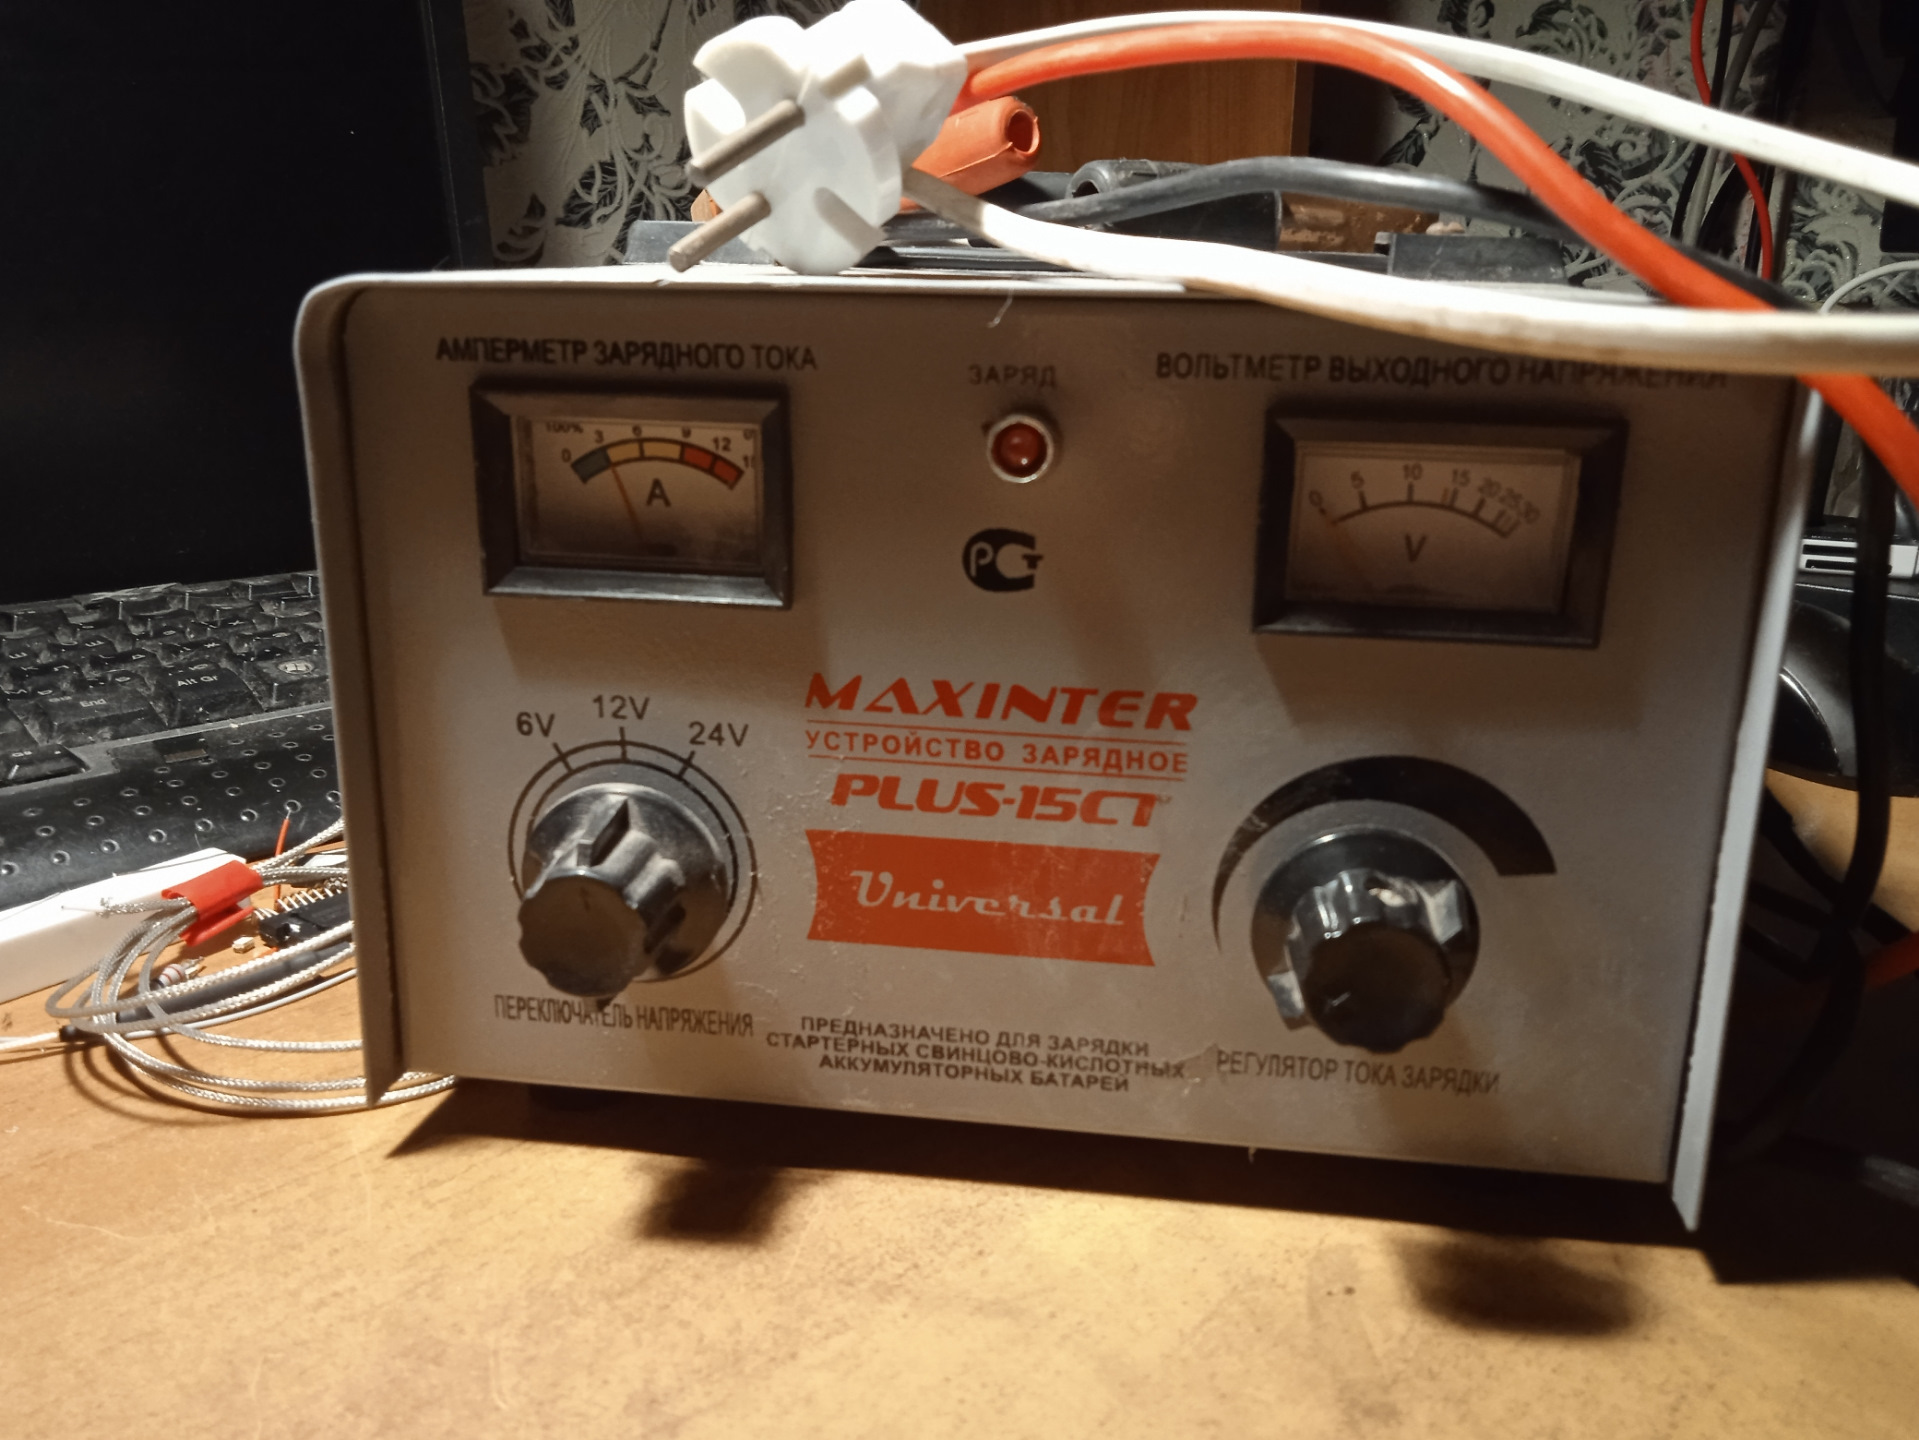 Максинтер зарядное. Maxinter Plus-15ct. Зарядное устройство Plus-15ct. Зарядное устройство Maxinter Plus-15a. Maxinter Plus-15ct схема.